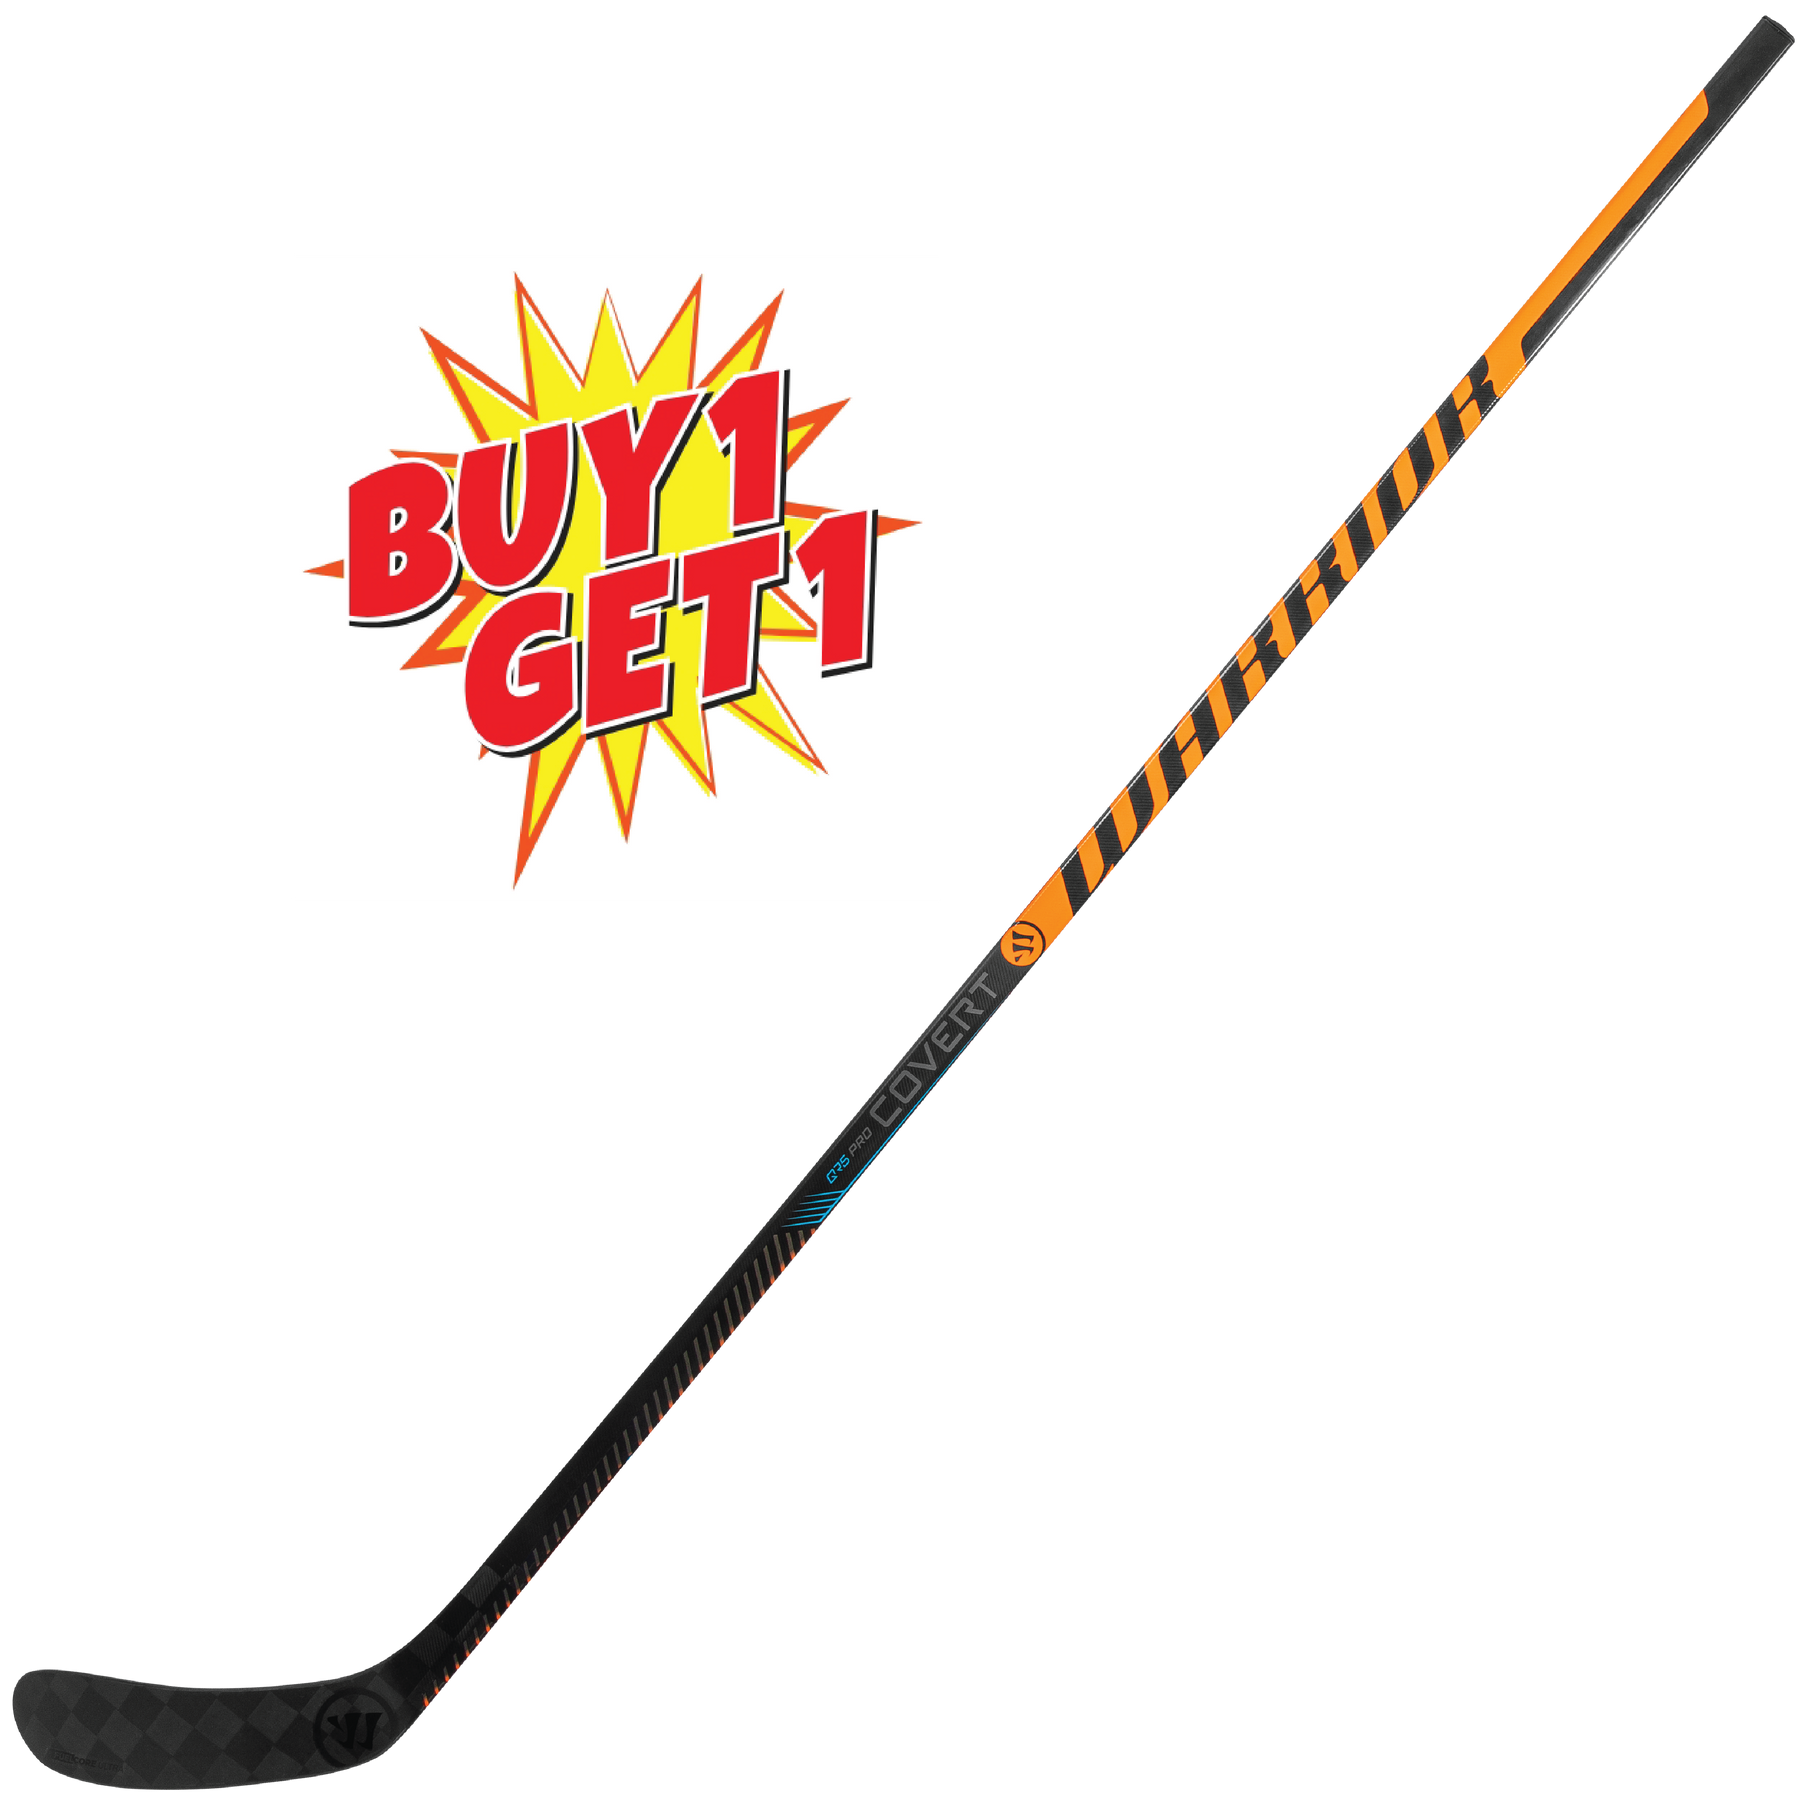 Warrior Covert QR5 Pro Senior Hockey Stick (63" Long)